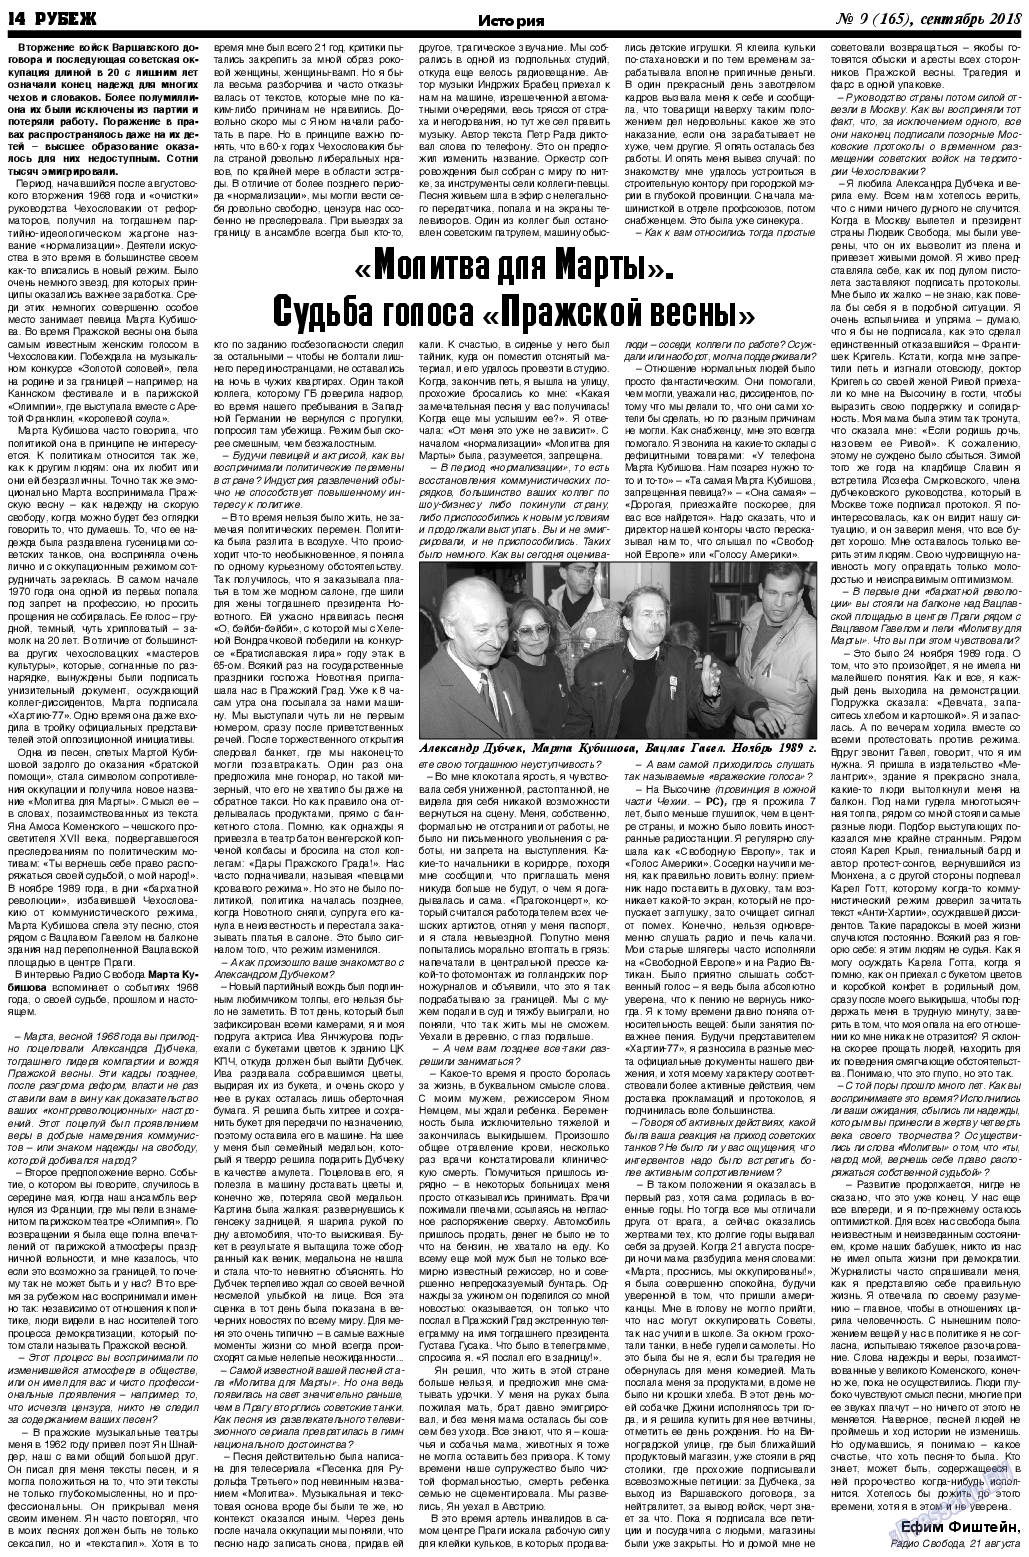 Рубеж, газета. 2018 №9 стр.14